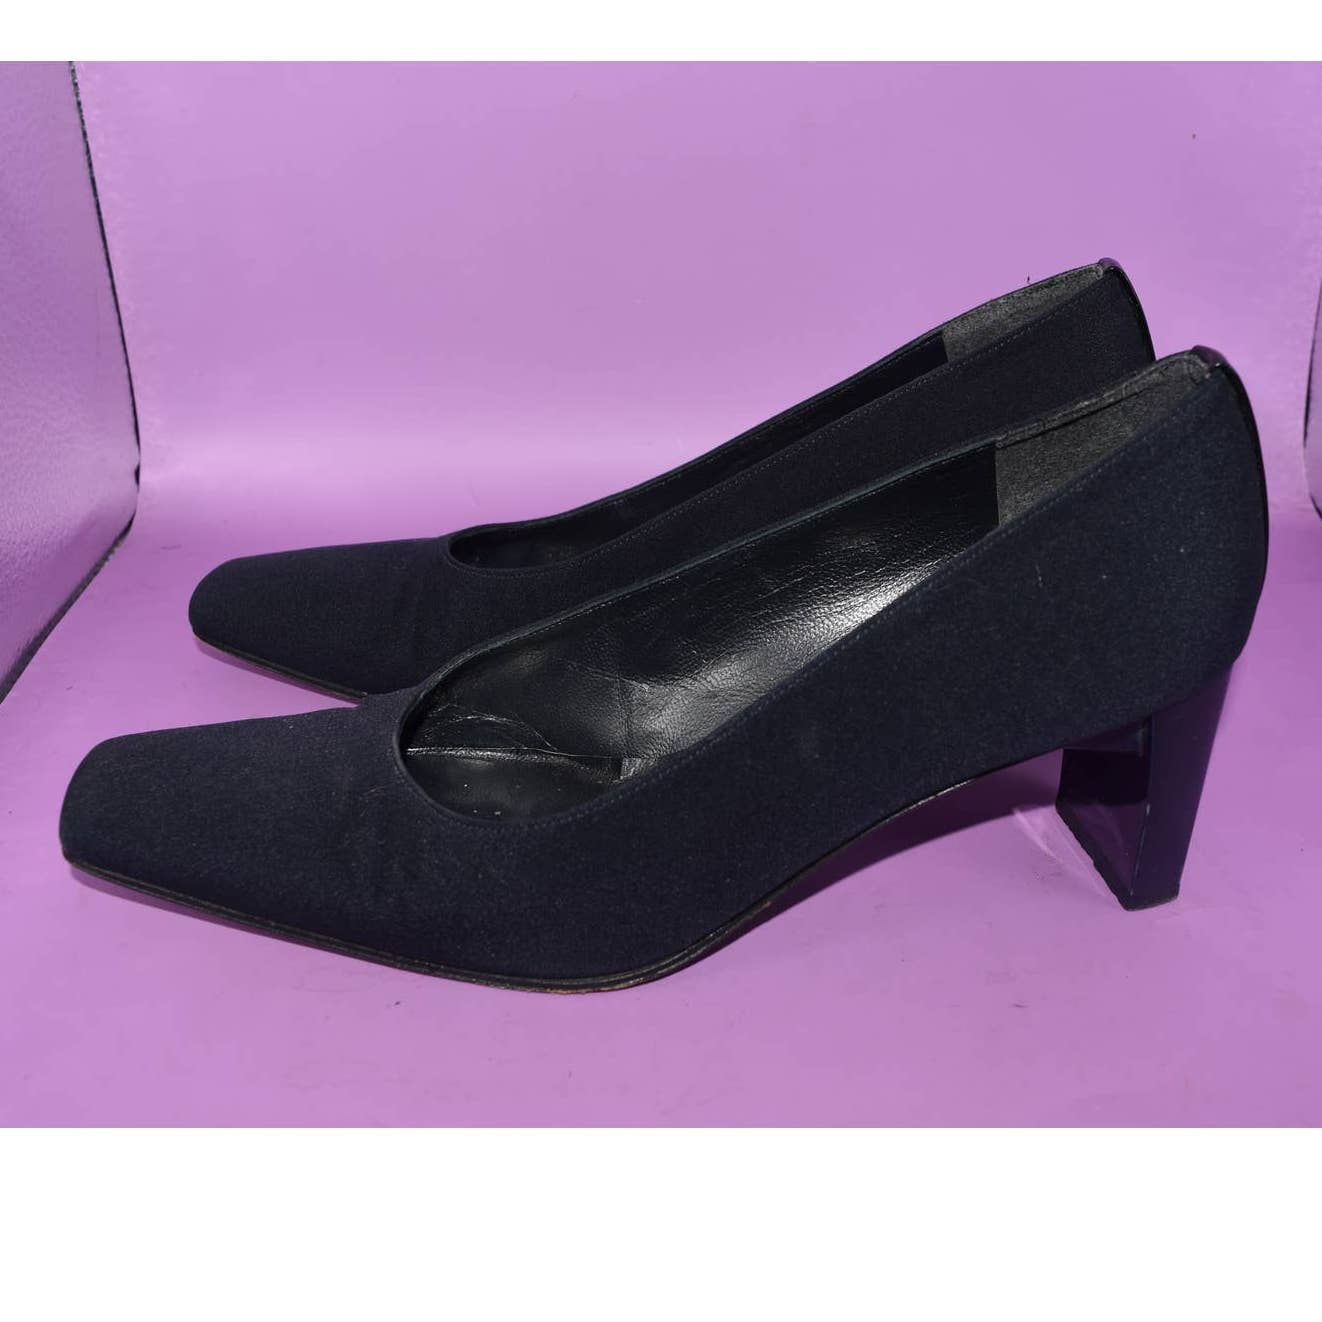 Stuart Weitzman Black Fabric Square Toe Heel Shoes - 6.5